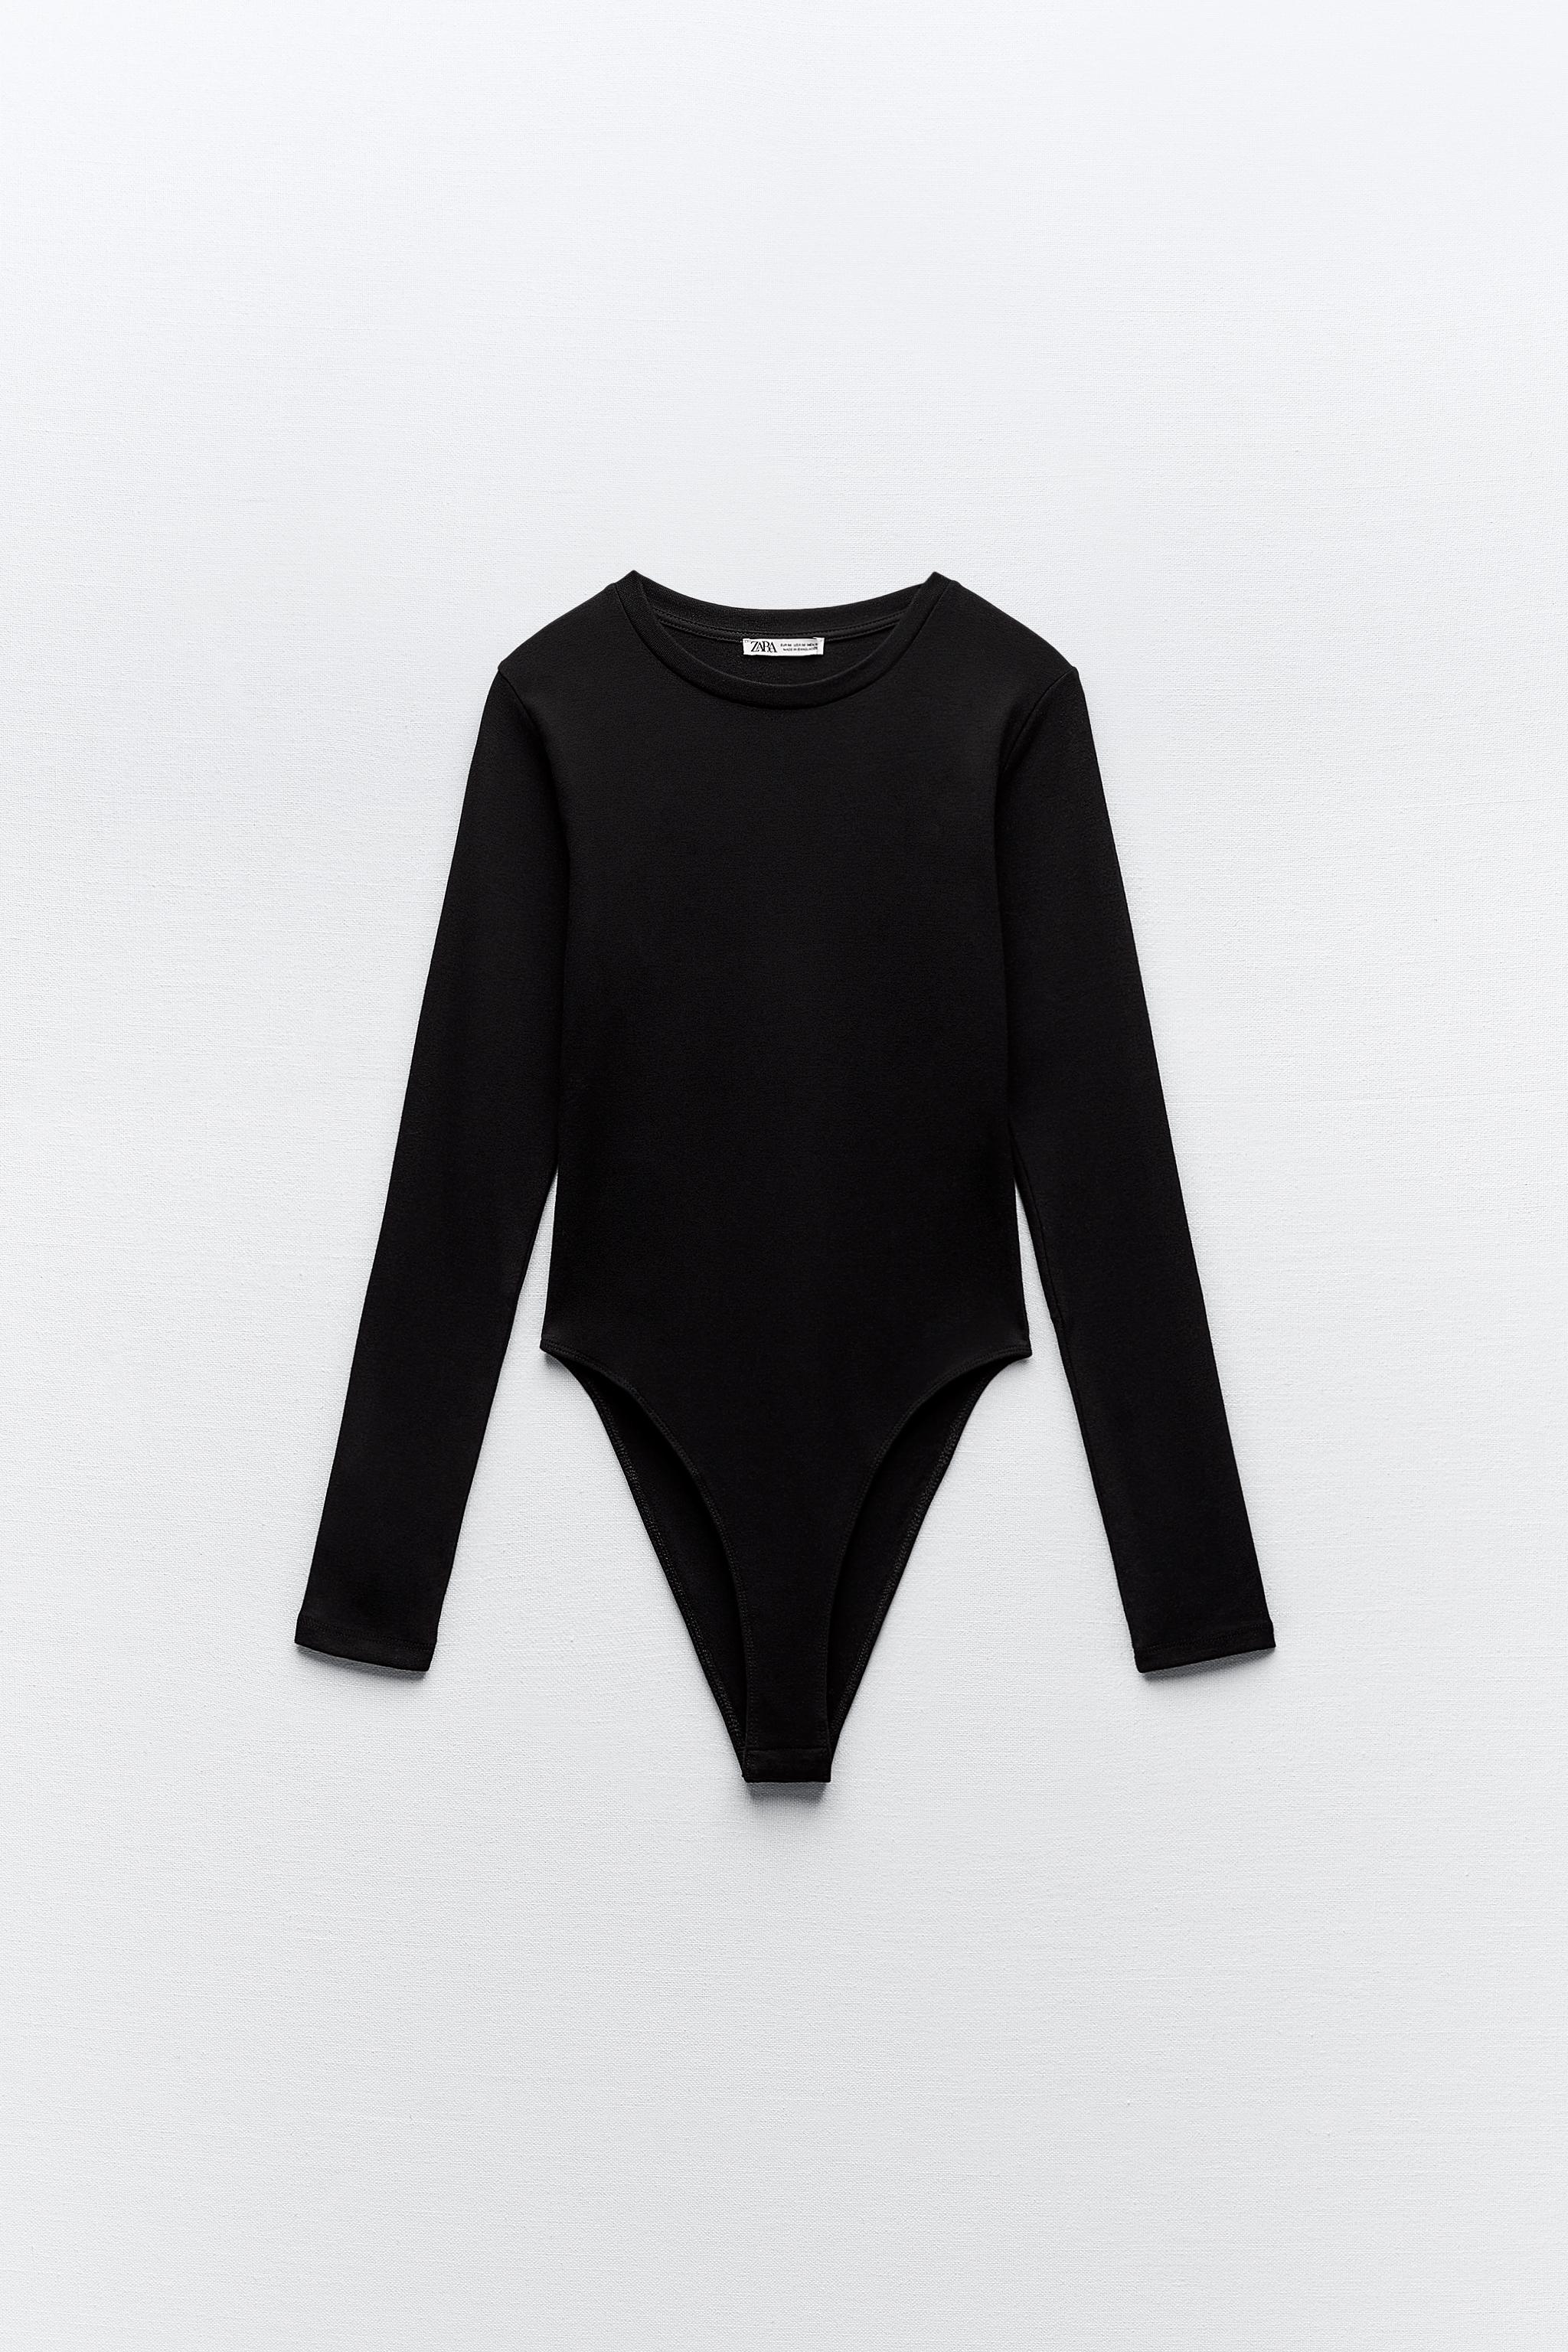 Zara J Crew Womens Black Floral V-Neck Long Sleeve Bodysuit Size M 4 0 -  Shop Linda's Stuff